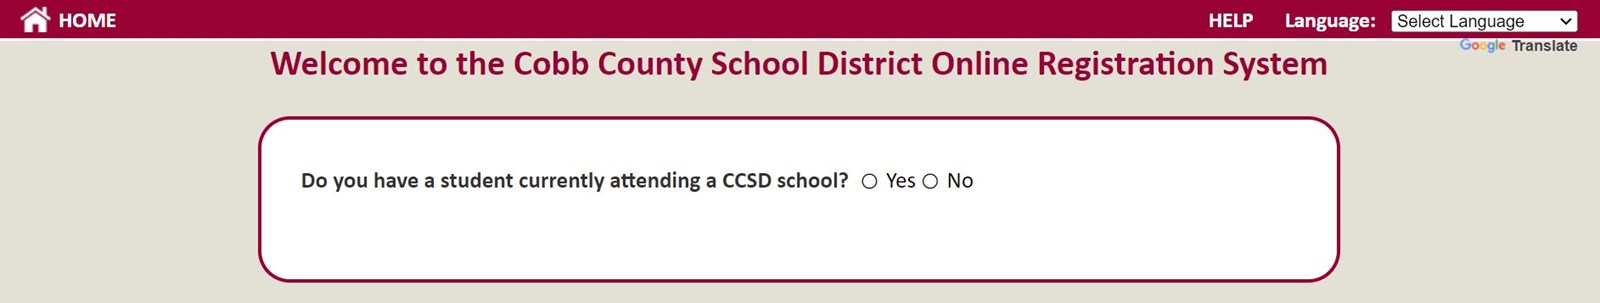 Image link to Cobb County Schools online registration